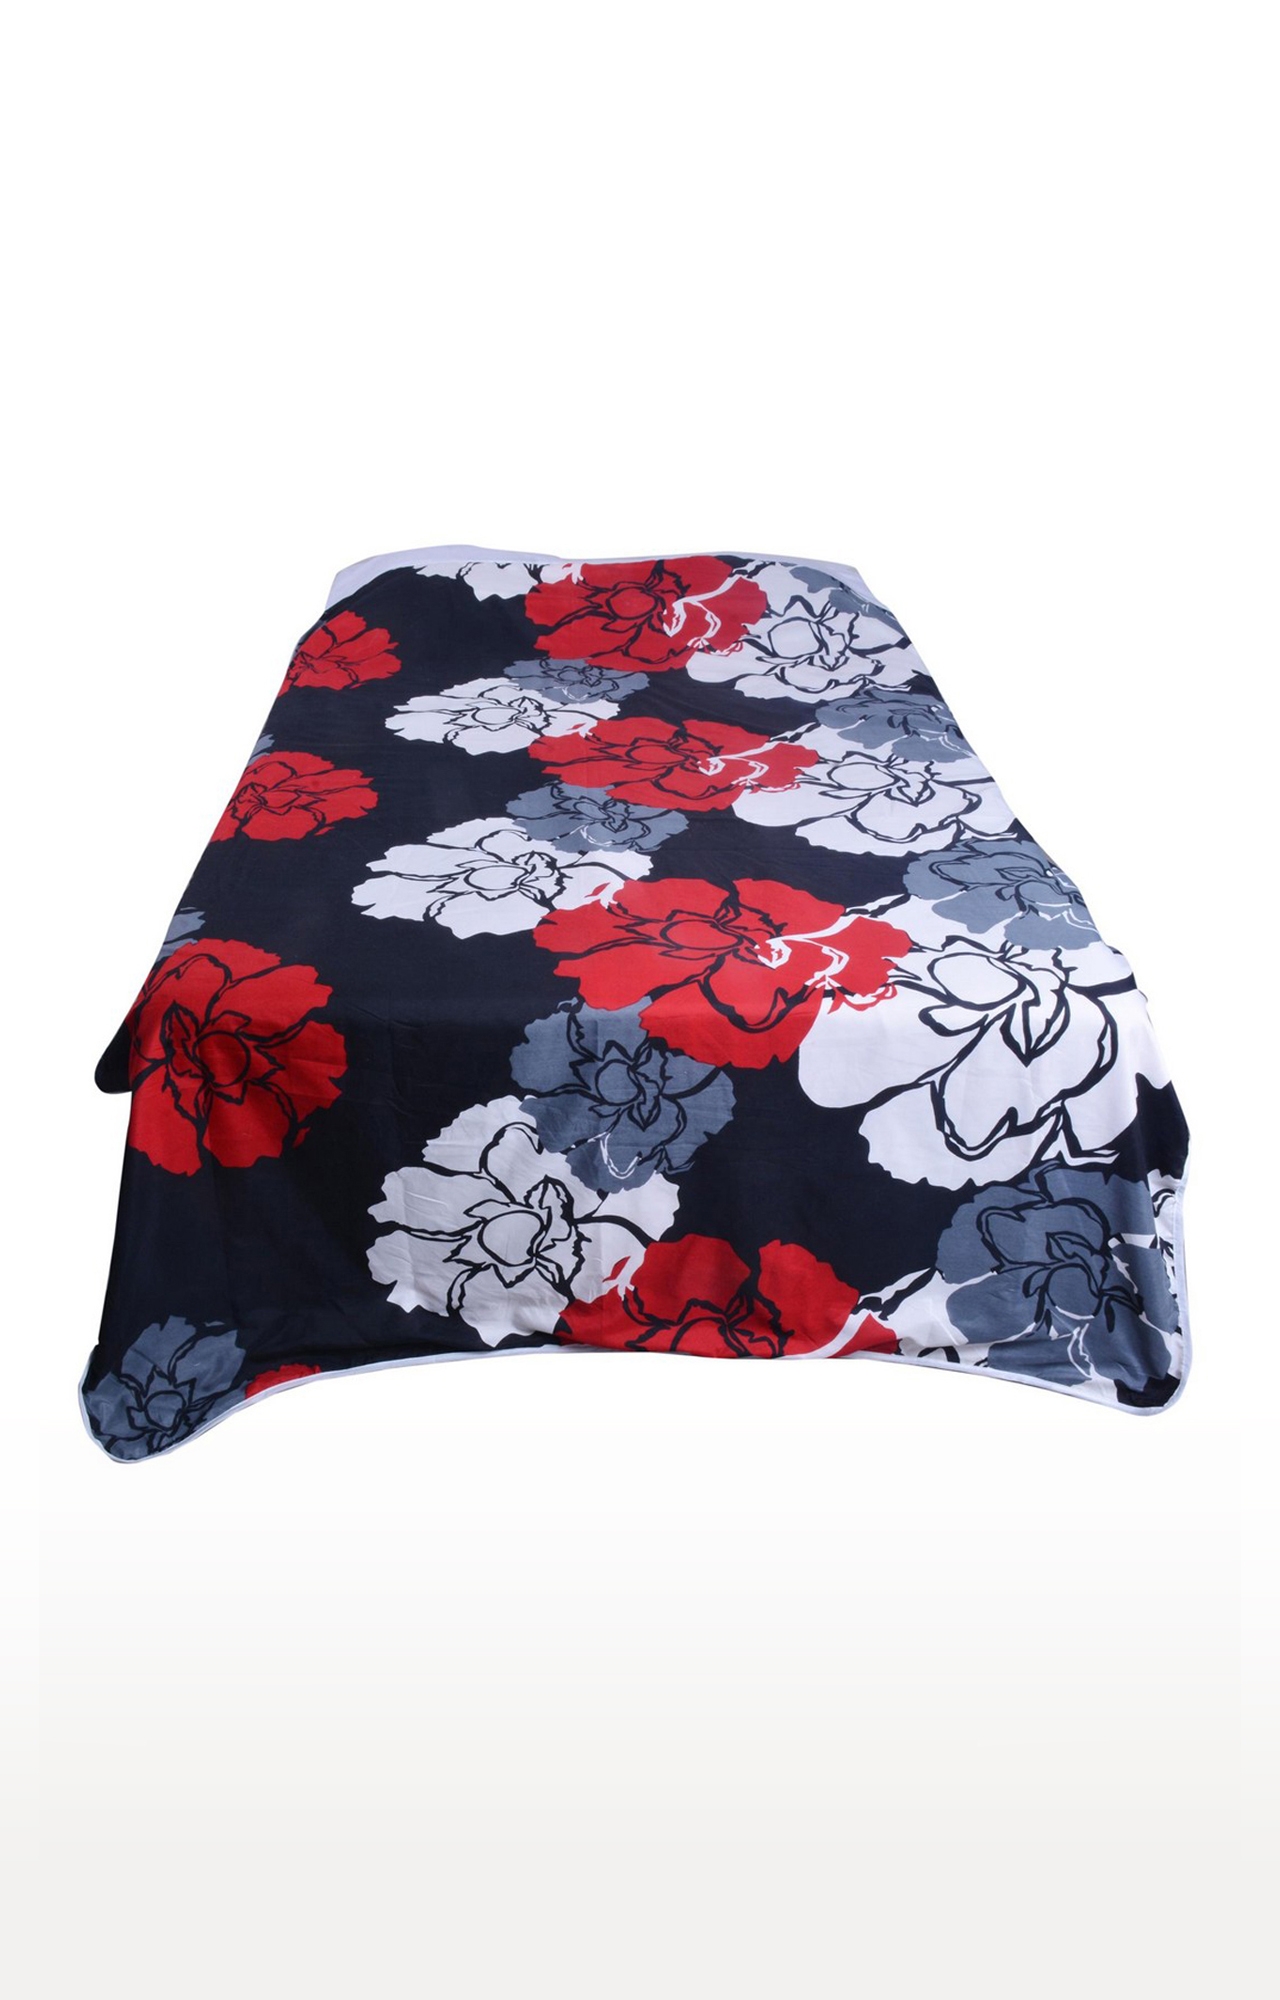 V Brown | Floral Printed Cotton 3 Layer Single Bed Quilt Dohar